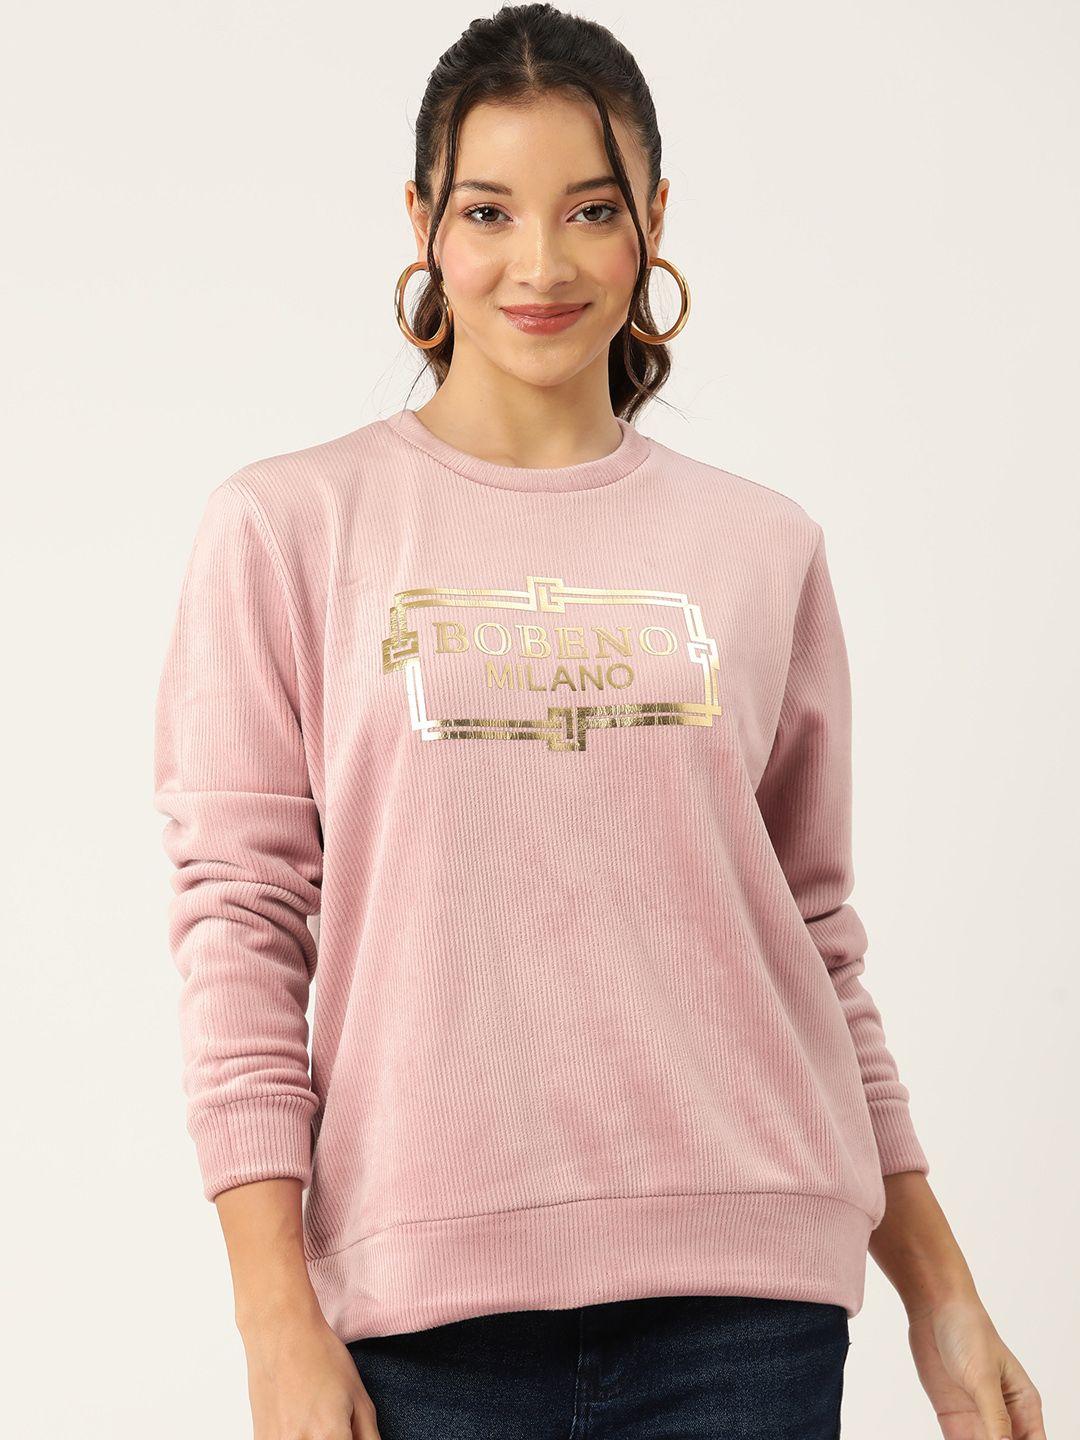 bobeno milano brand logo printed fleece longline sweatshirt